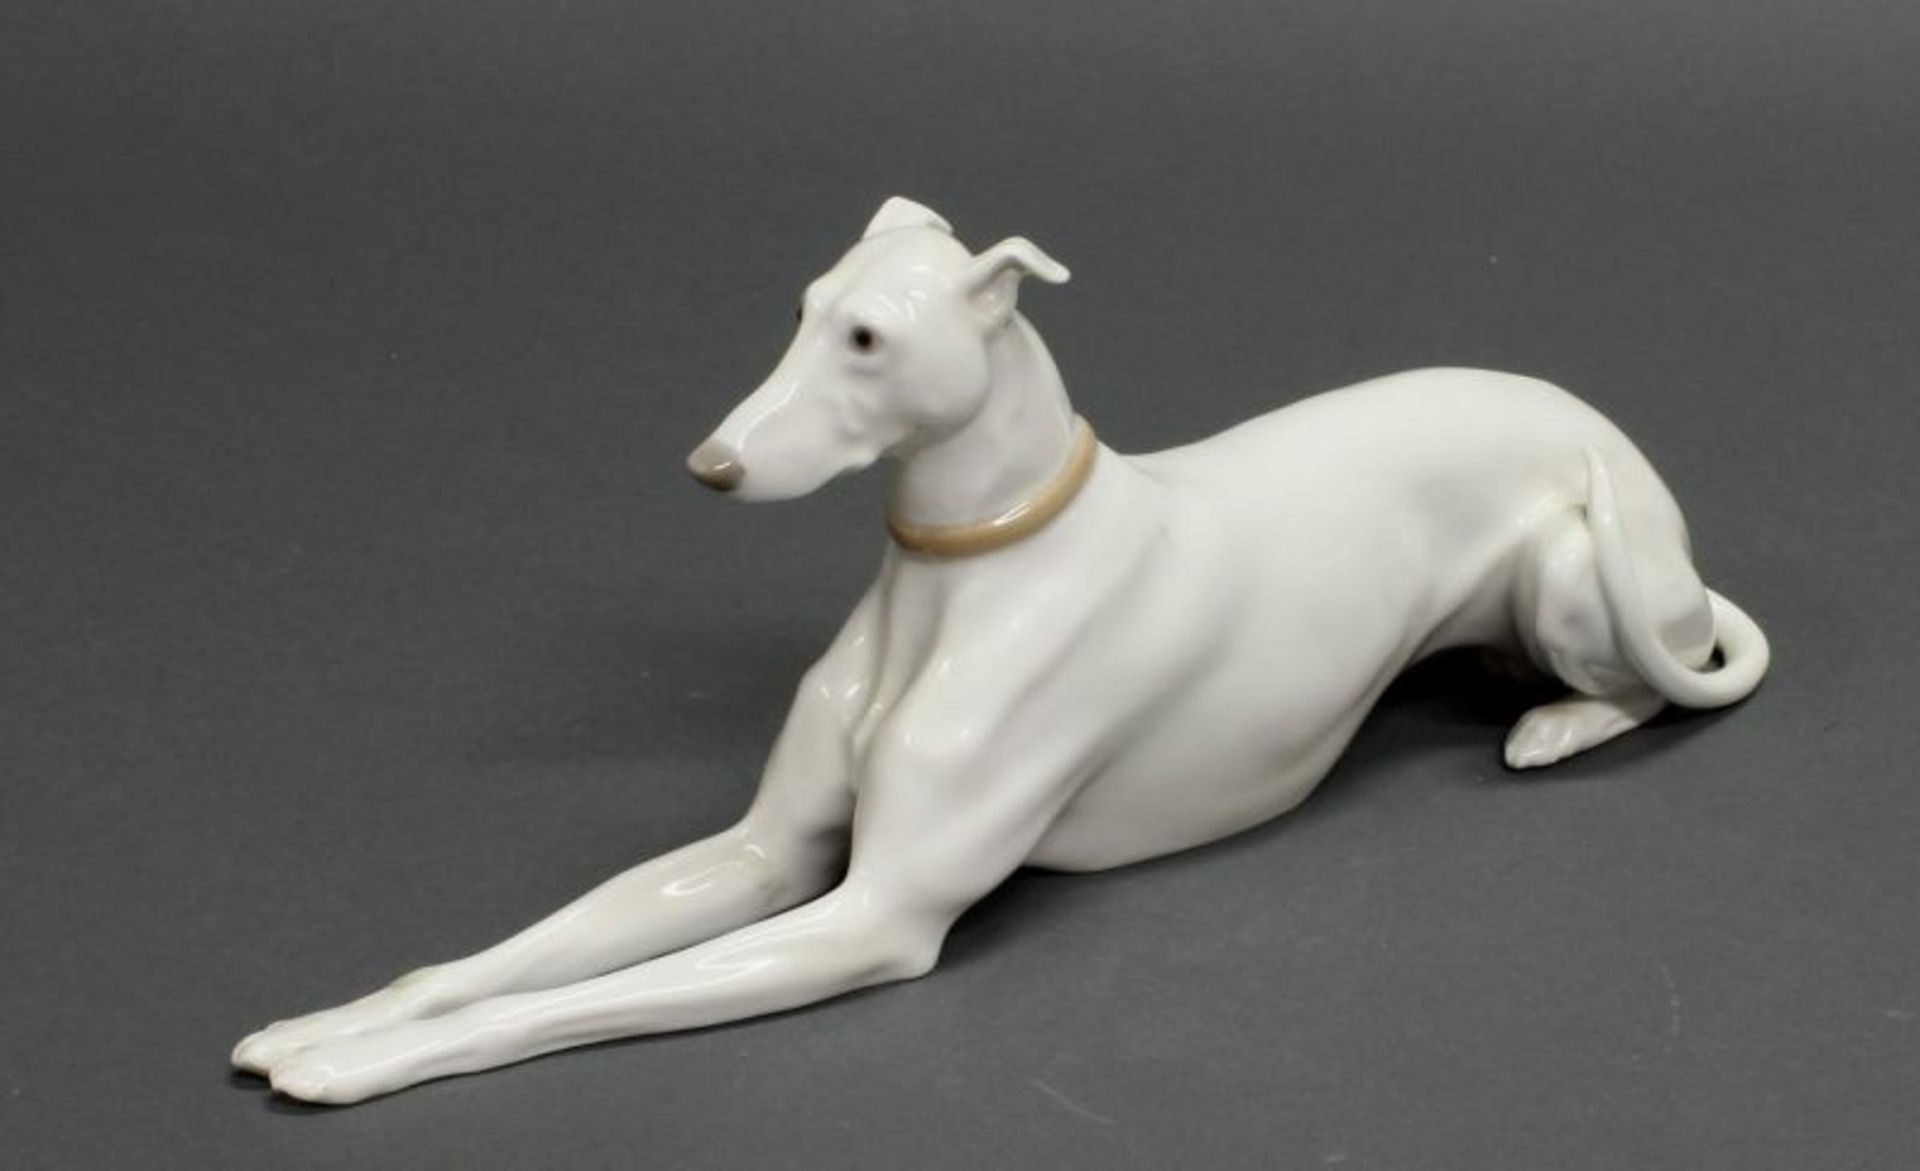 Porzellanfigur, "Liegender Greyhound", Bing & Groendahl, Modellnummer 2079, polychrom, 11.7 cm